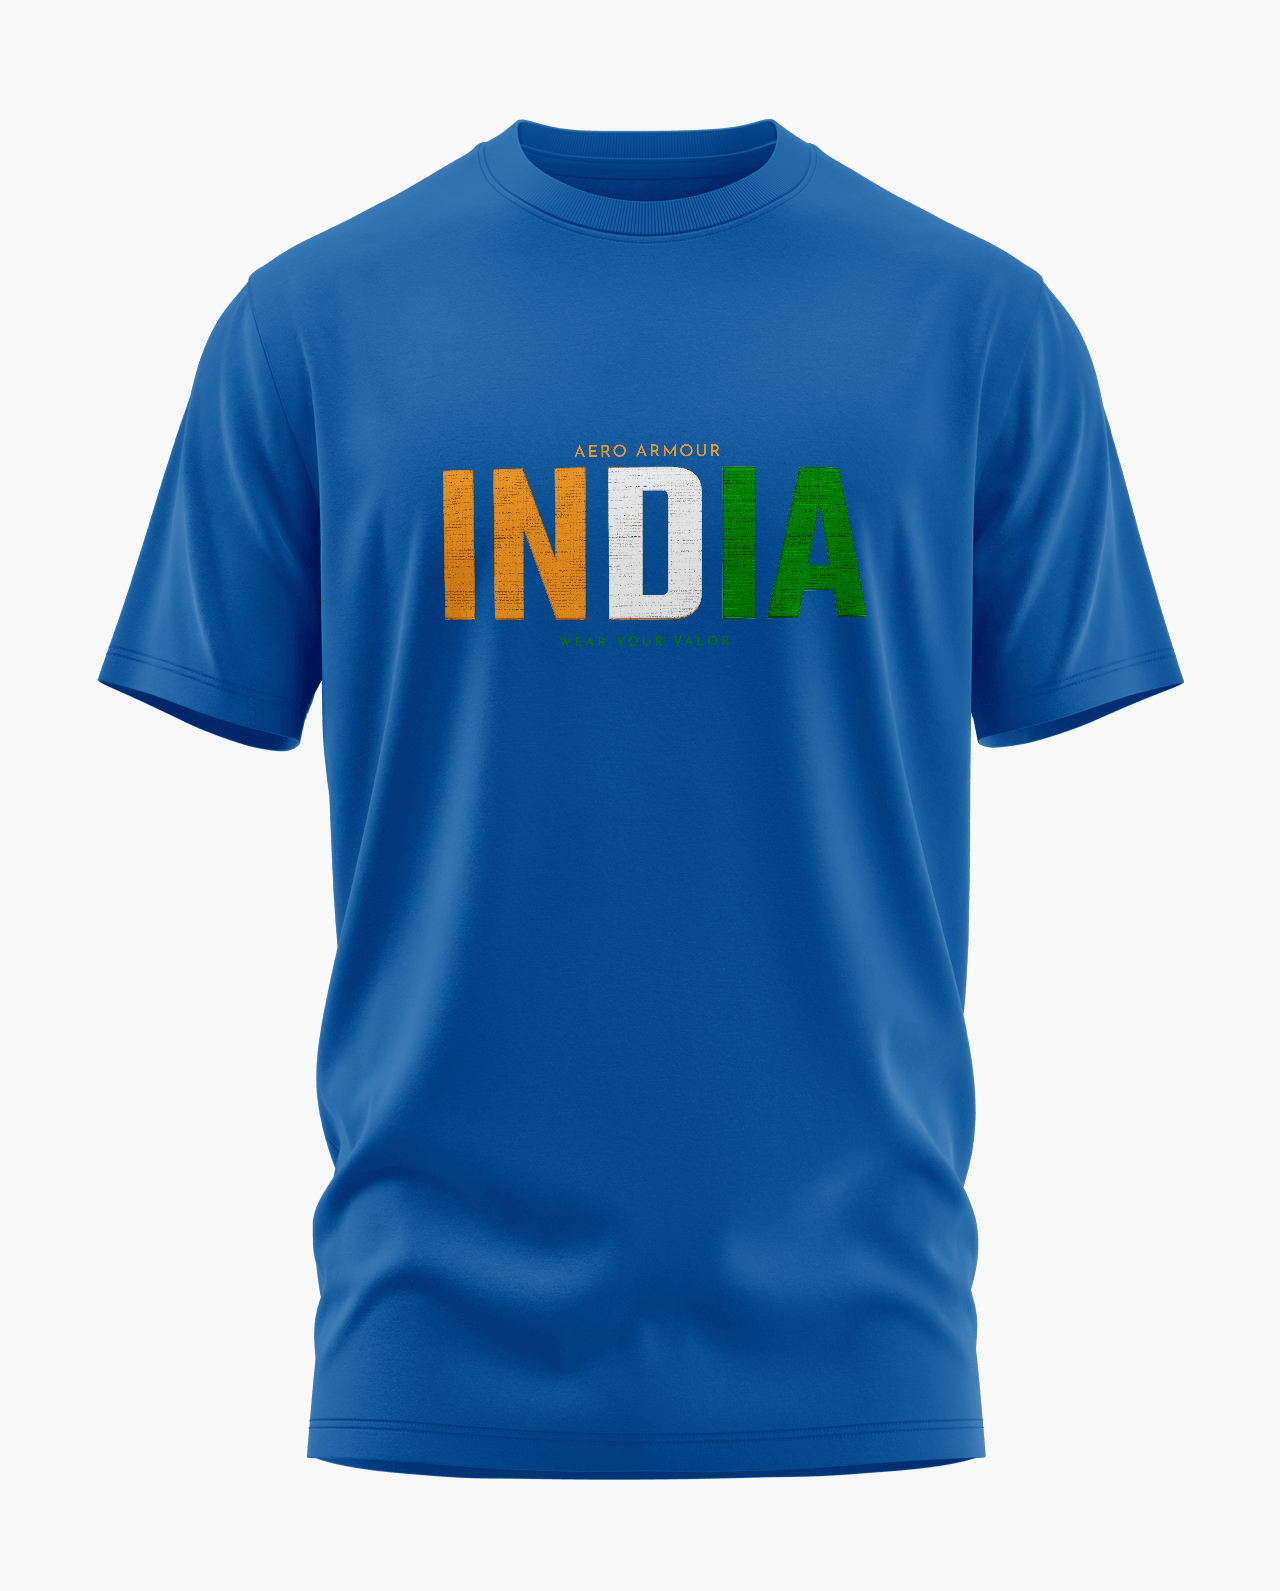 IND T-Shirt - Aero Armour